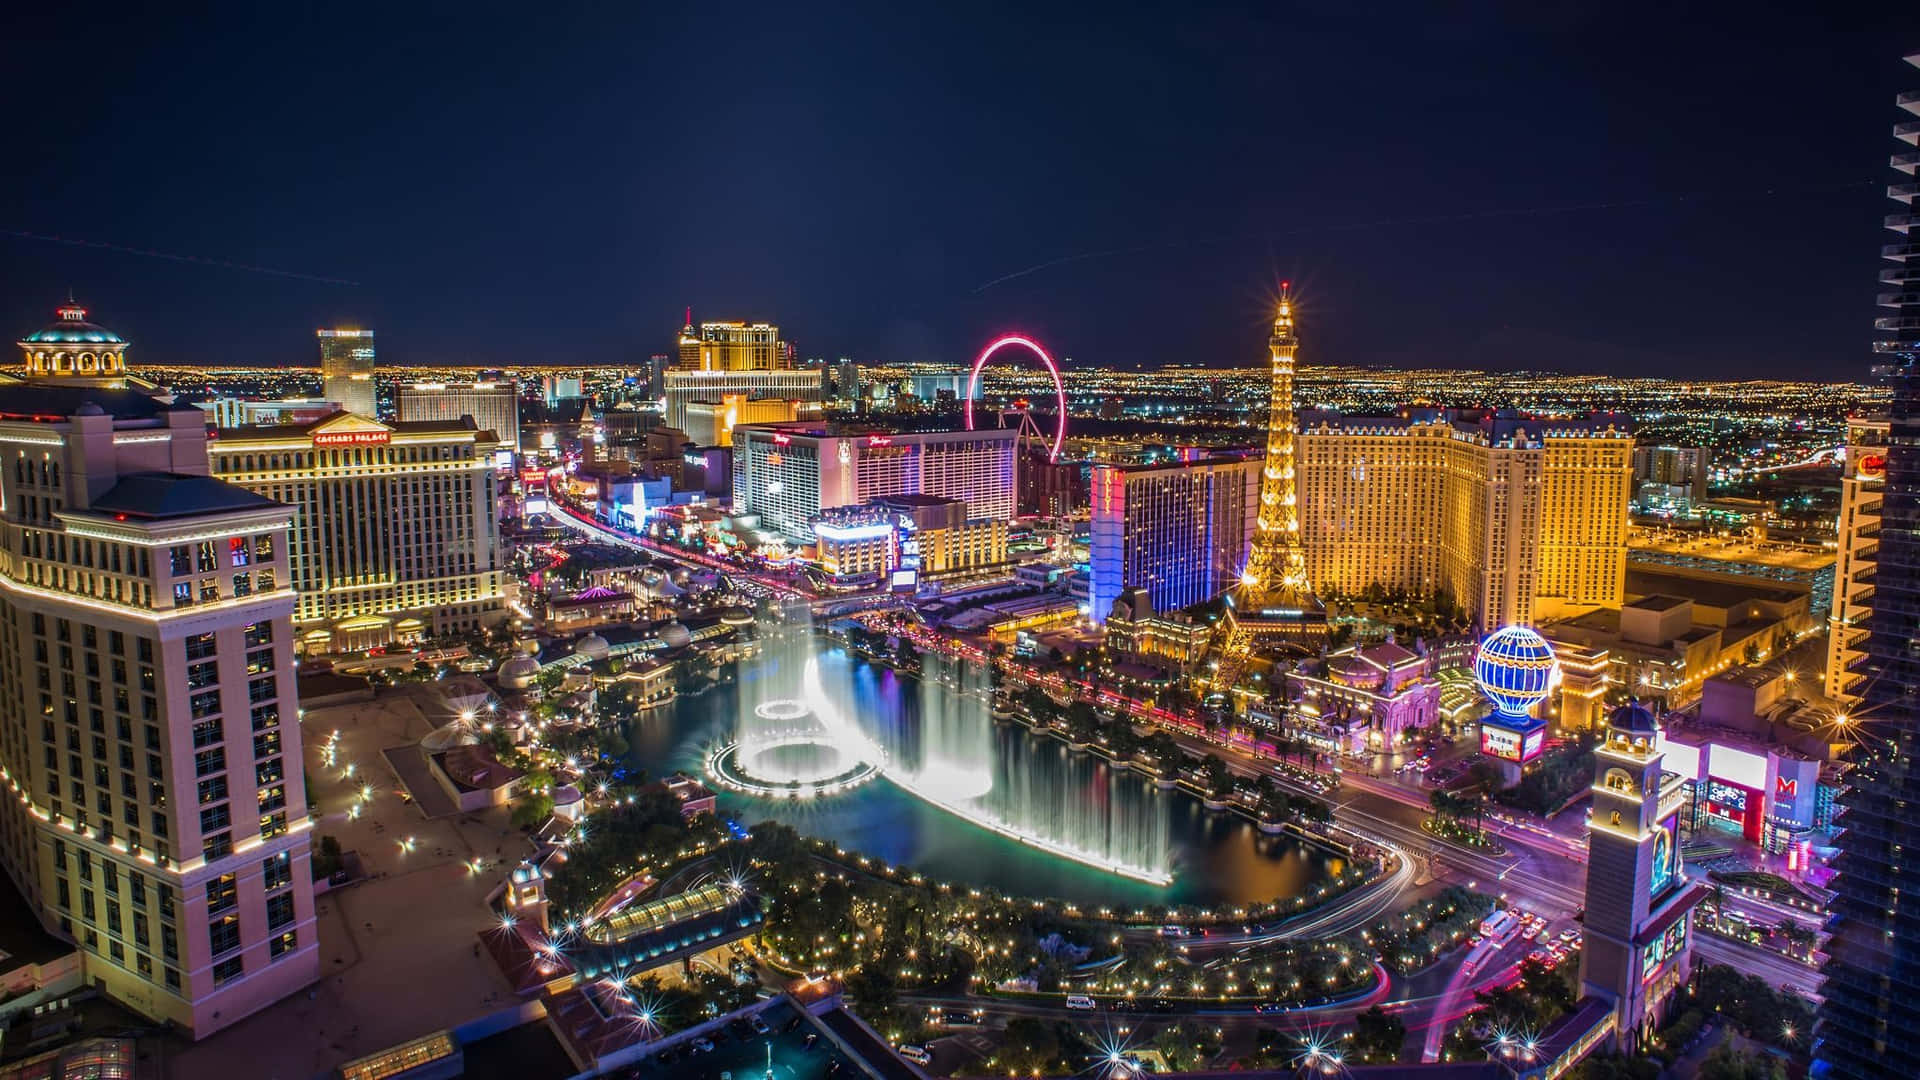 The Las Vegas Strip Picture